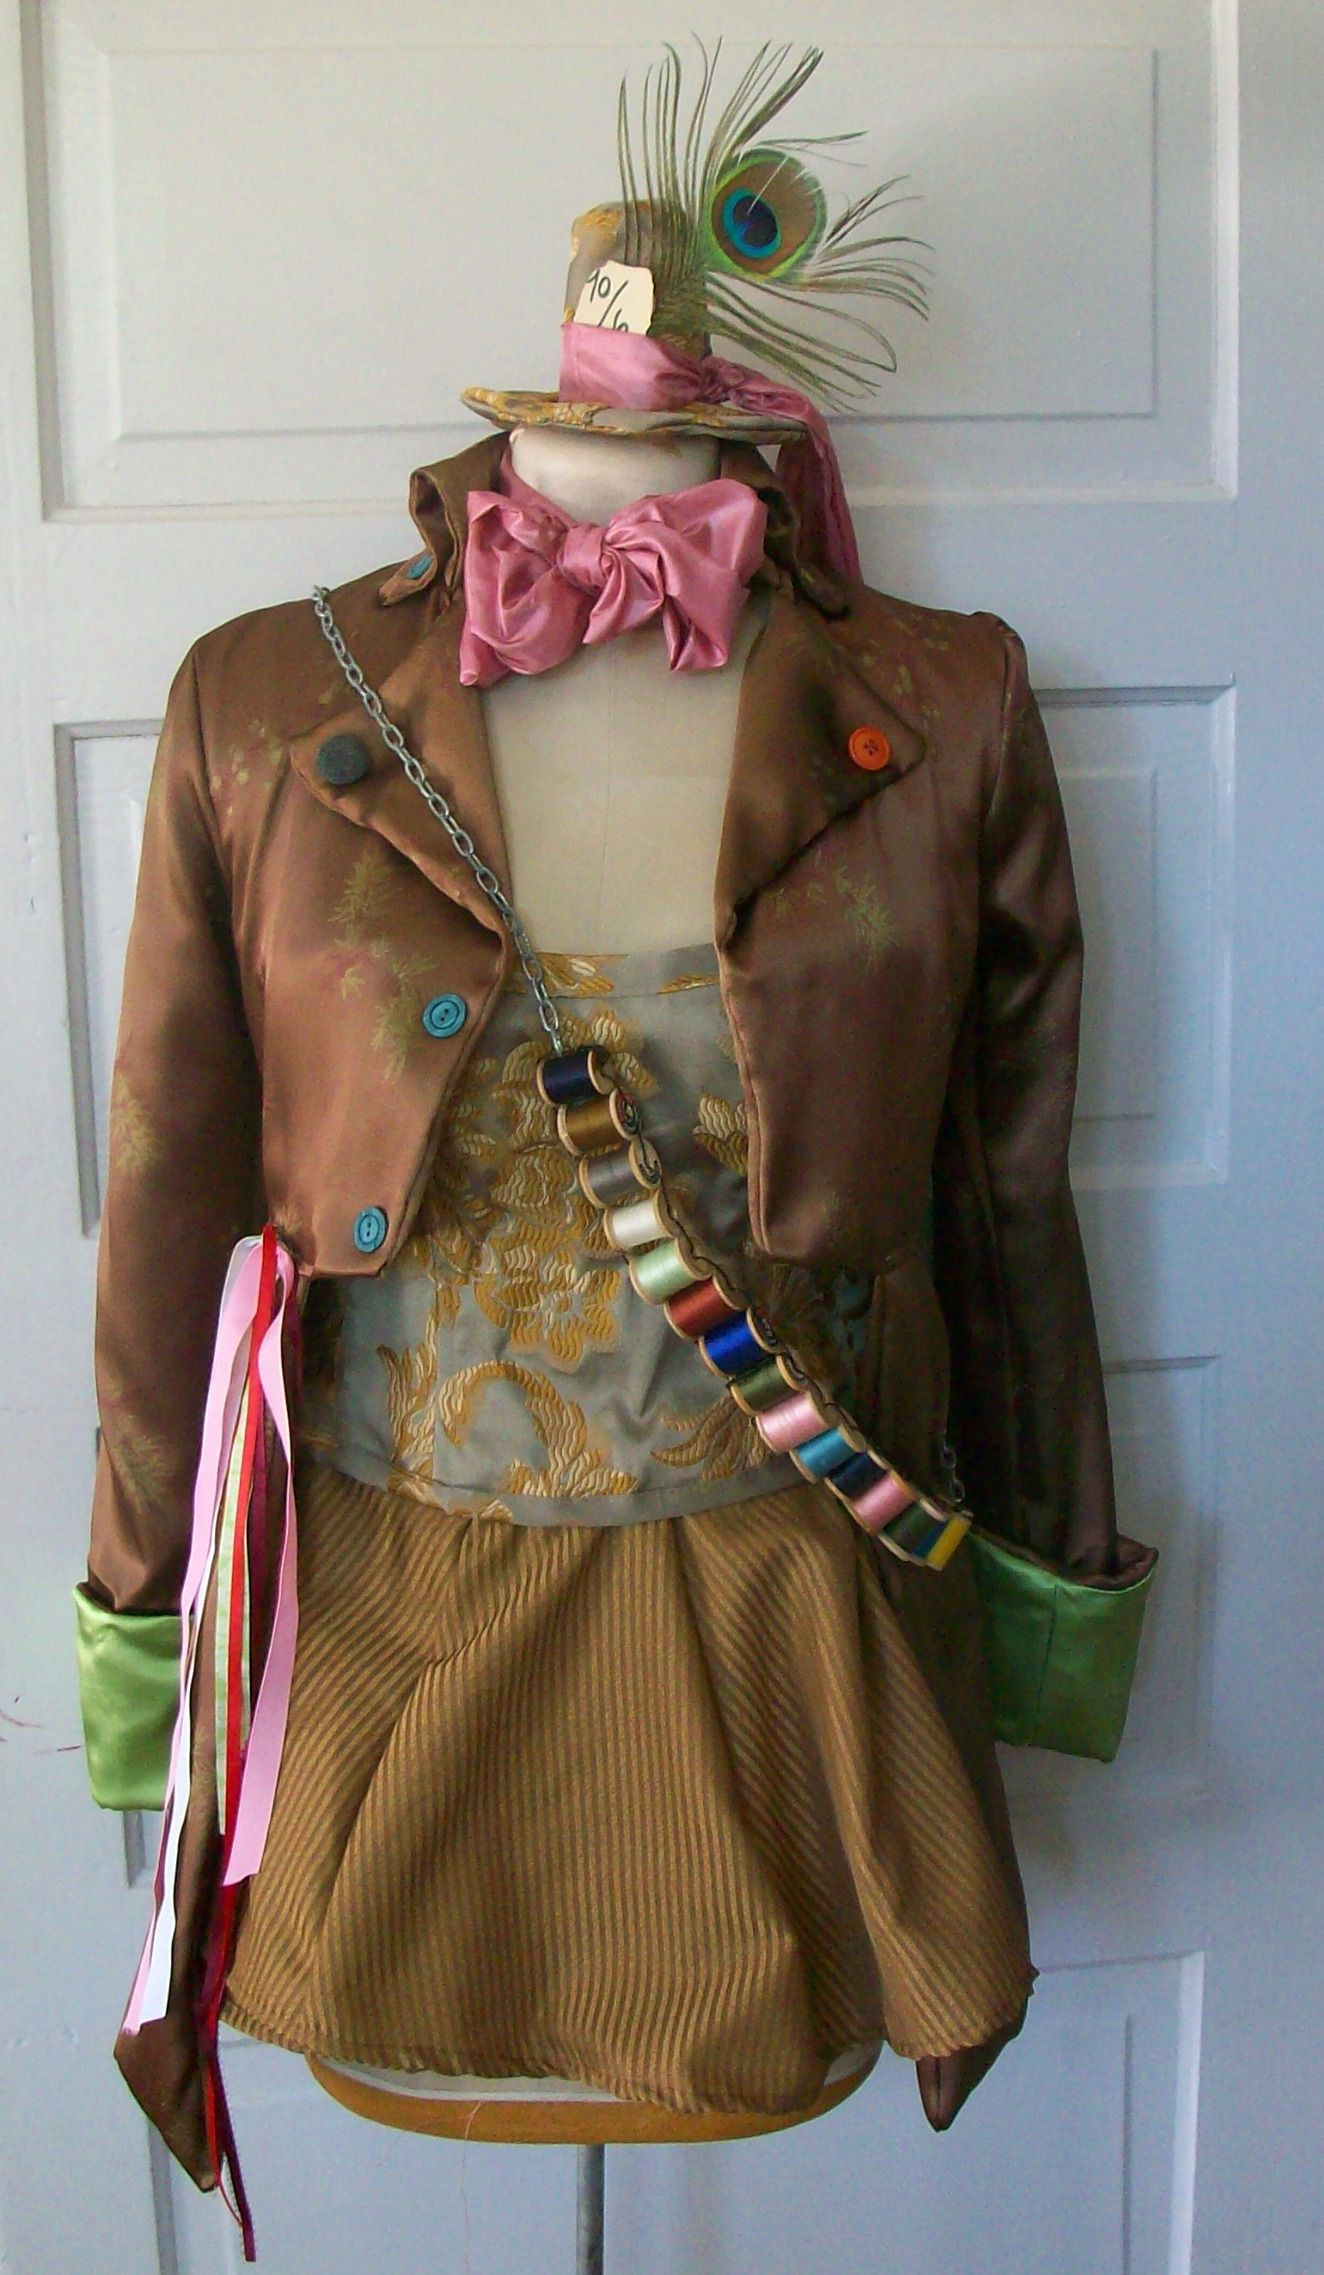 Mad Hatter Costume DIY
 Female Mad Hatter custom corset costume